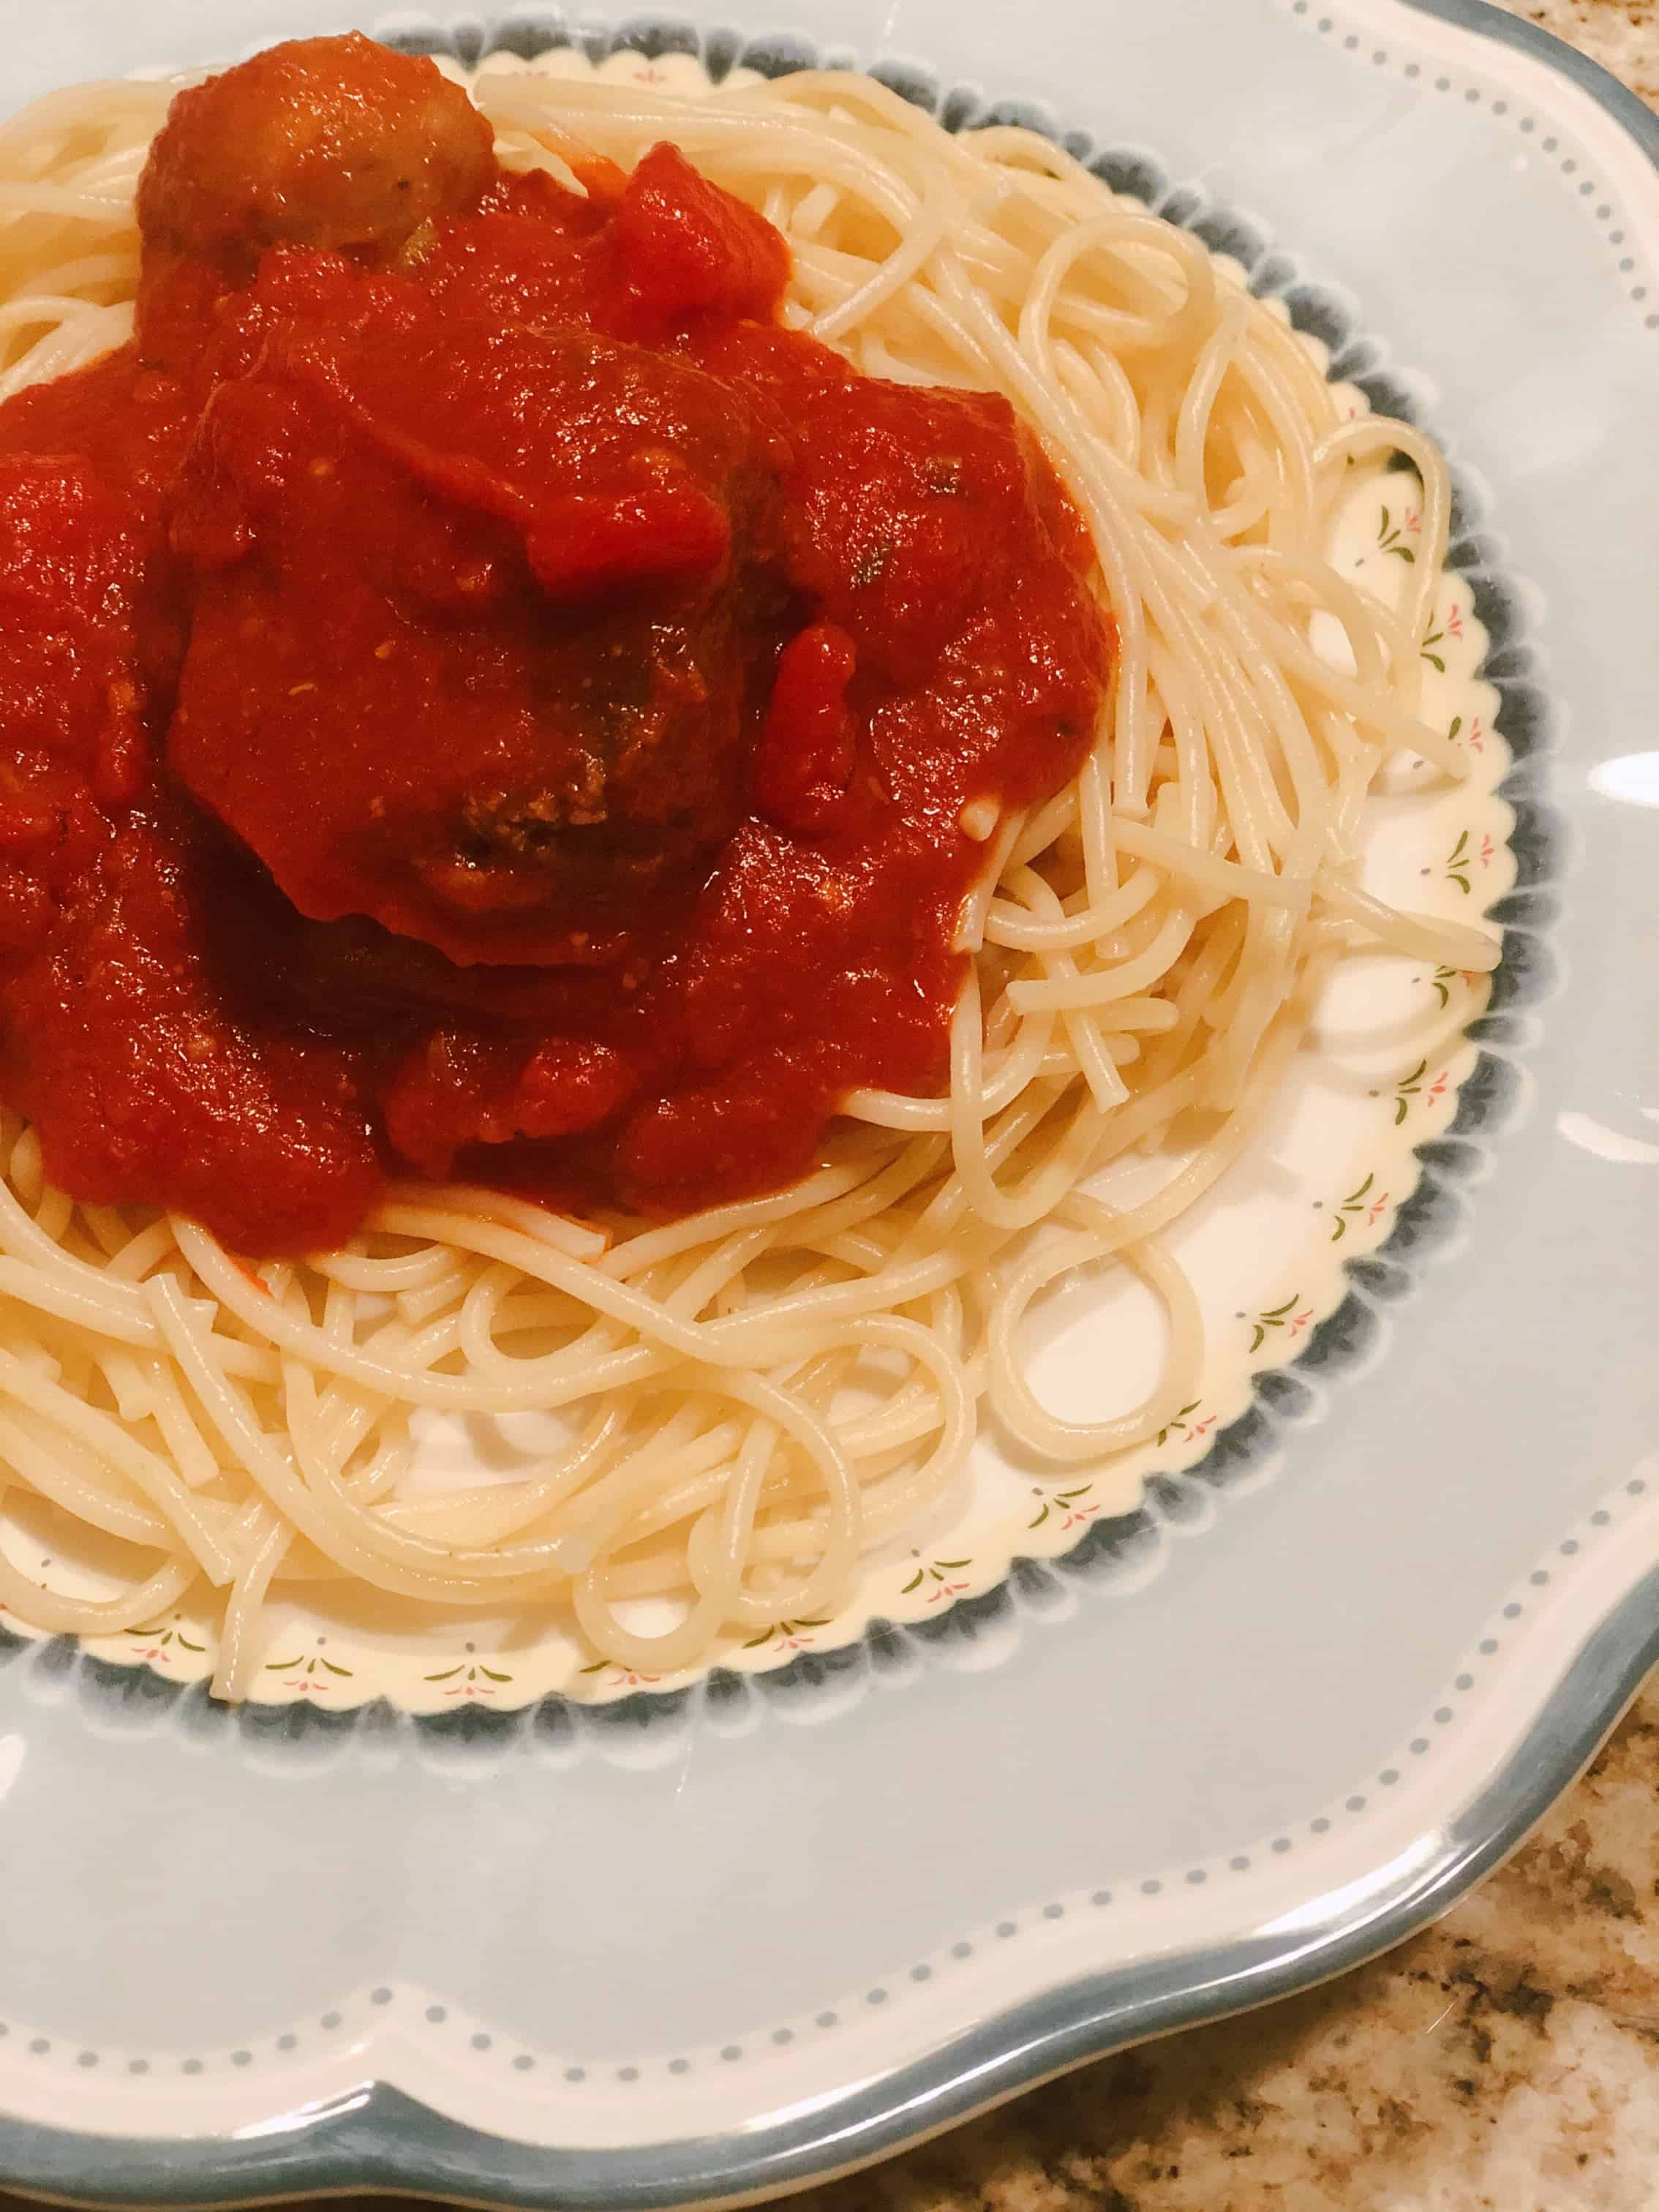 Clemenza sauce over spaghetti